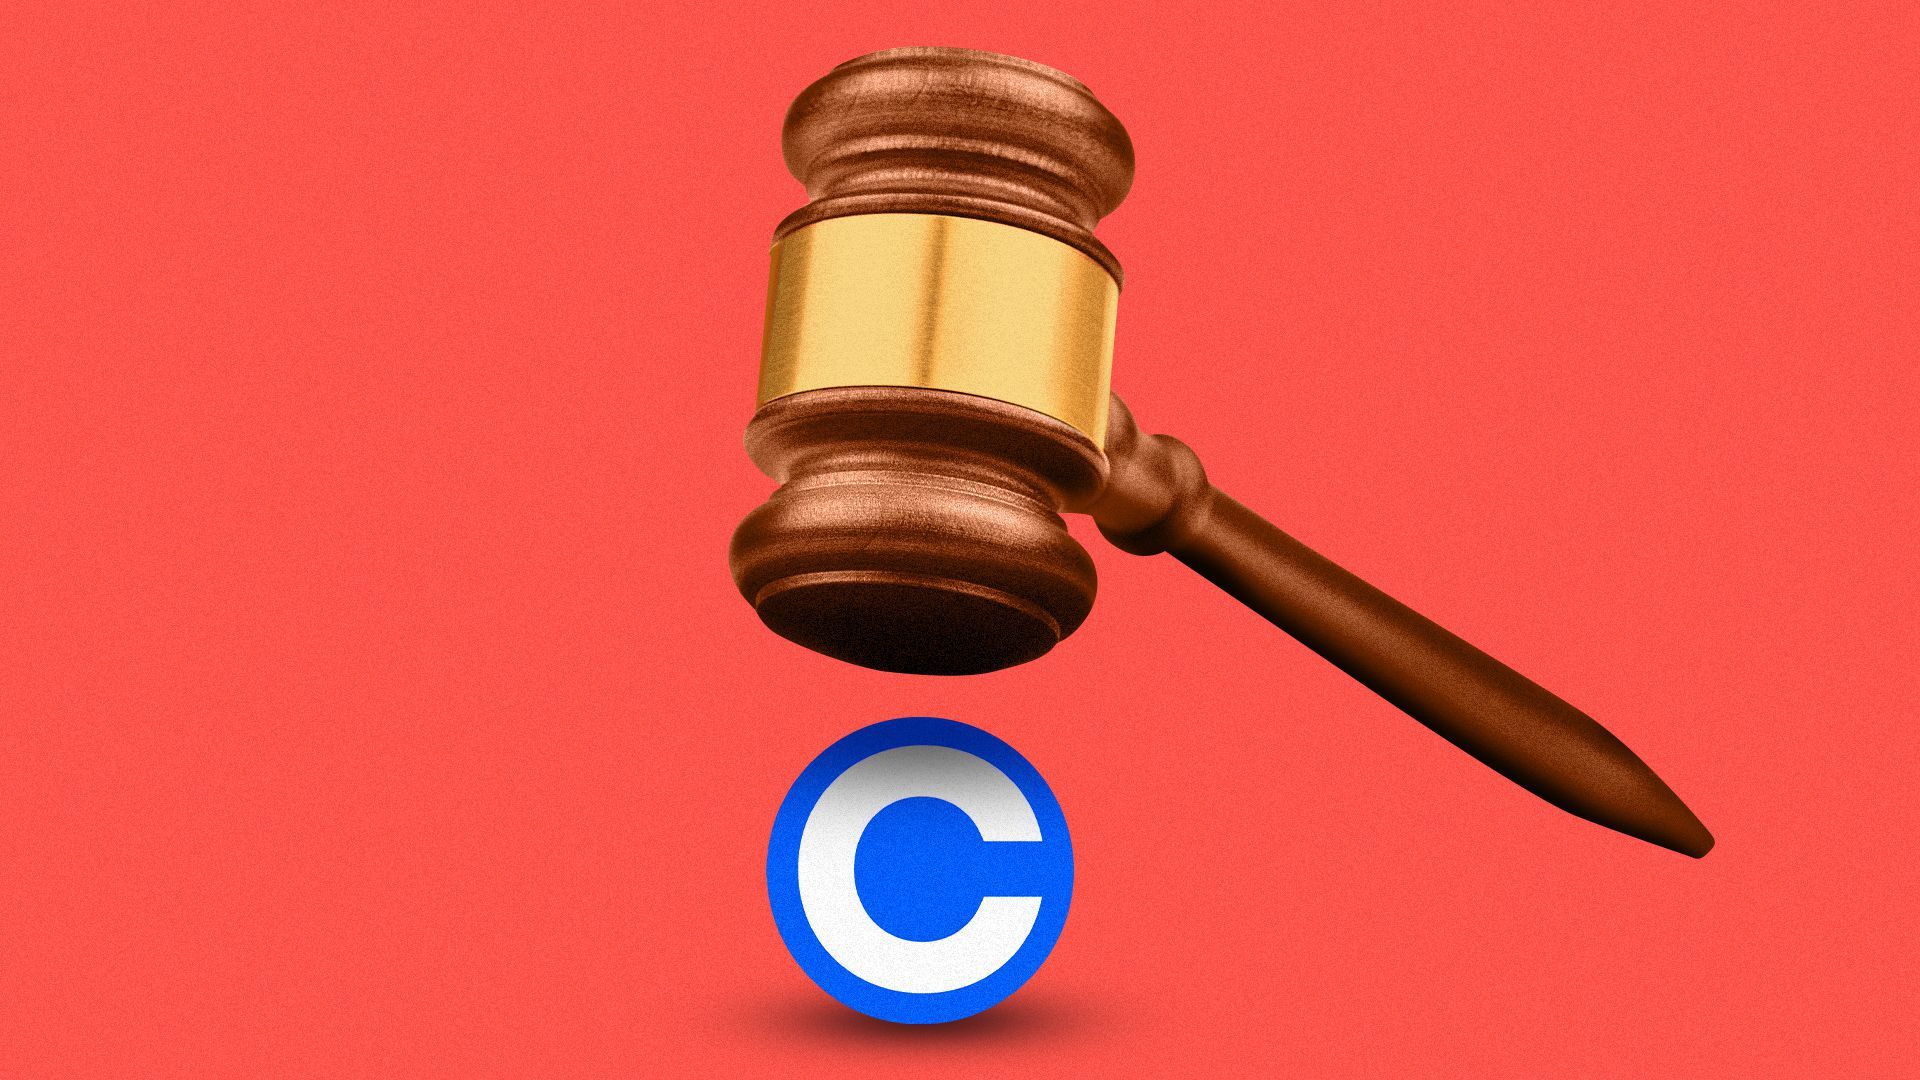 A judicial hammer coming down on the Coinbase logo